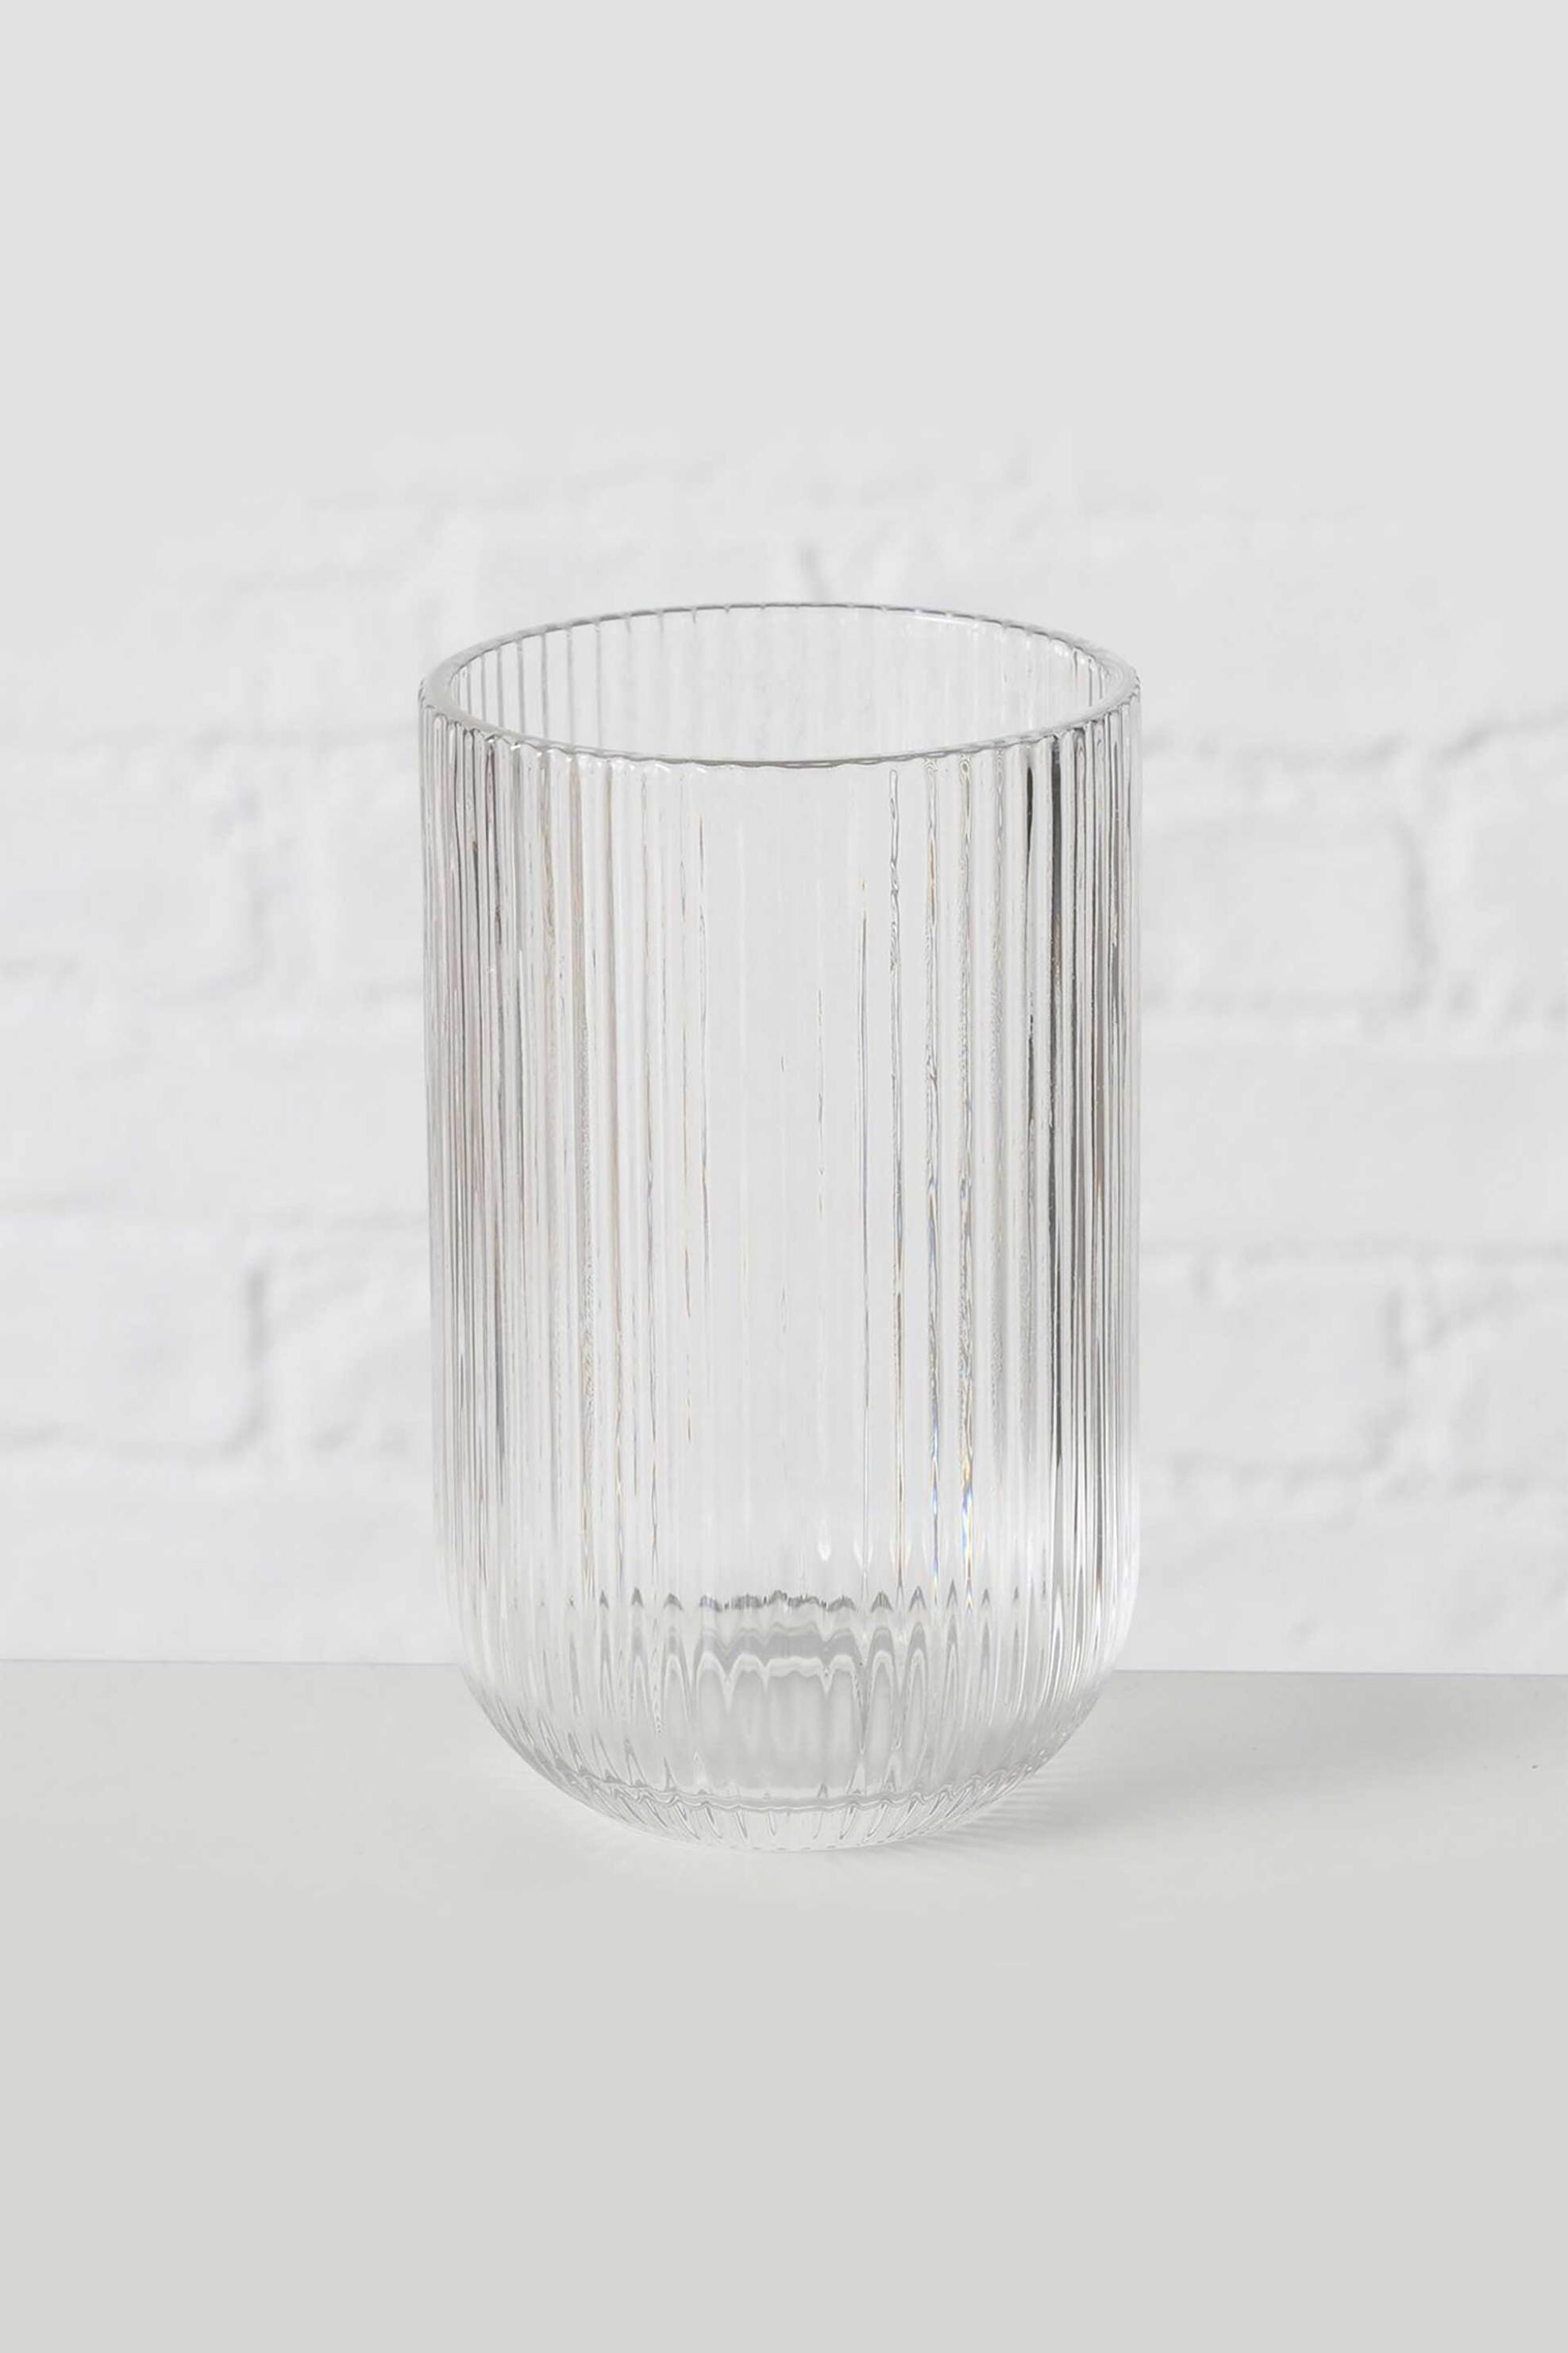 Home > ΚΟΥΖΙΝΑ > Υαλικά > Ποτήρια DOMUS HOMUS γυάλινο ποτήρι νερού "Rigano" 13 x 8 cm διάφανο - 20-25-426